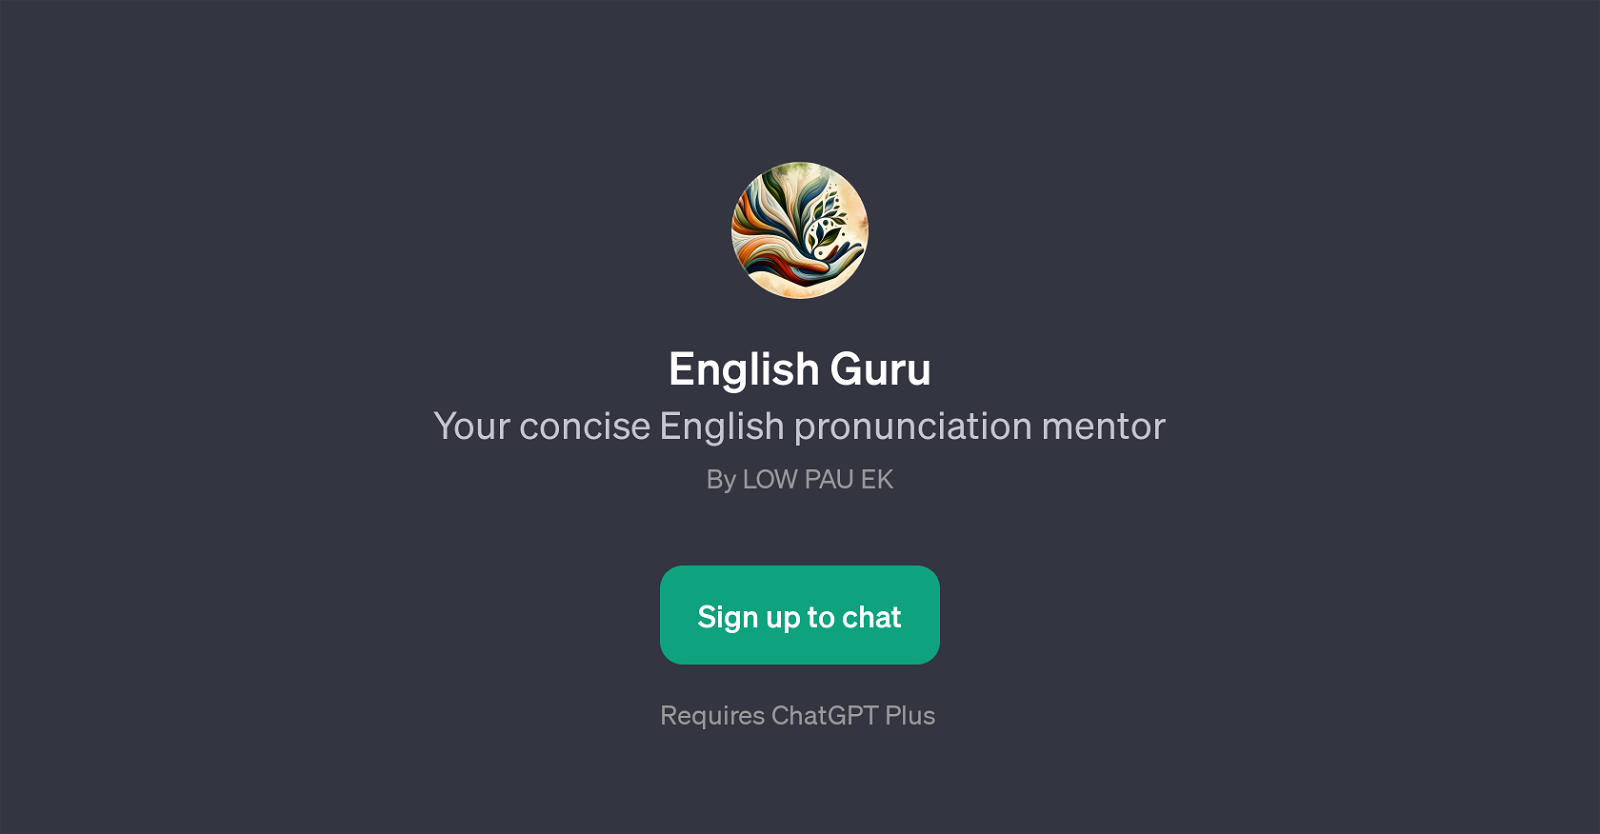 English Guru website